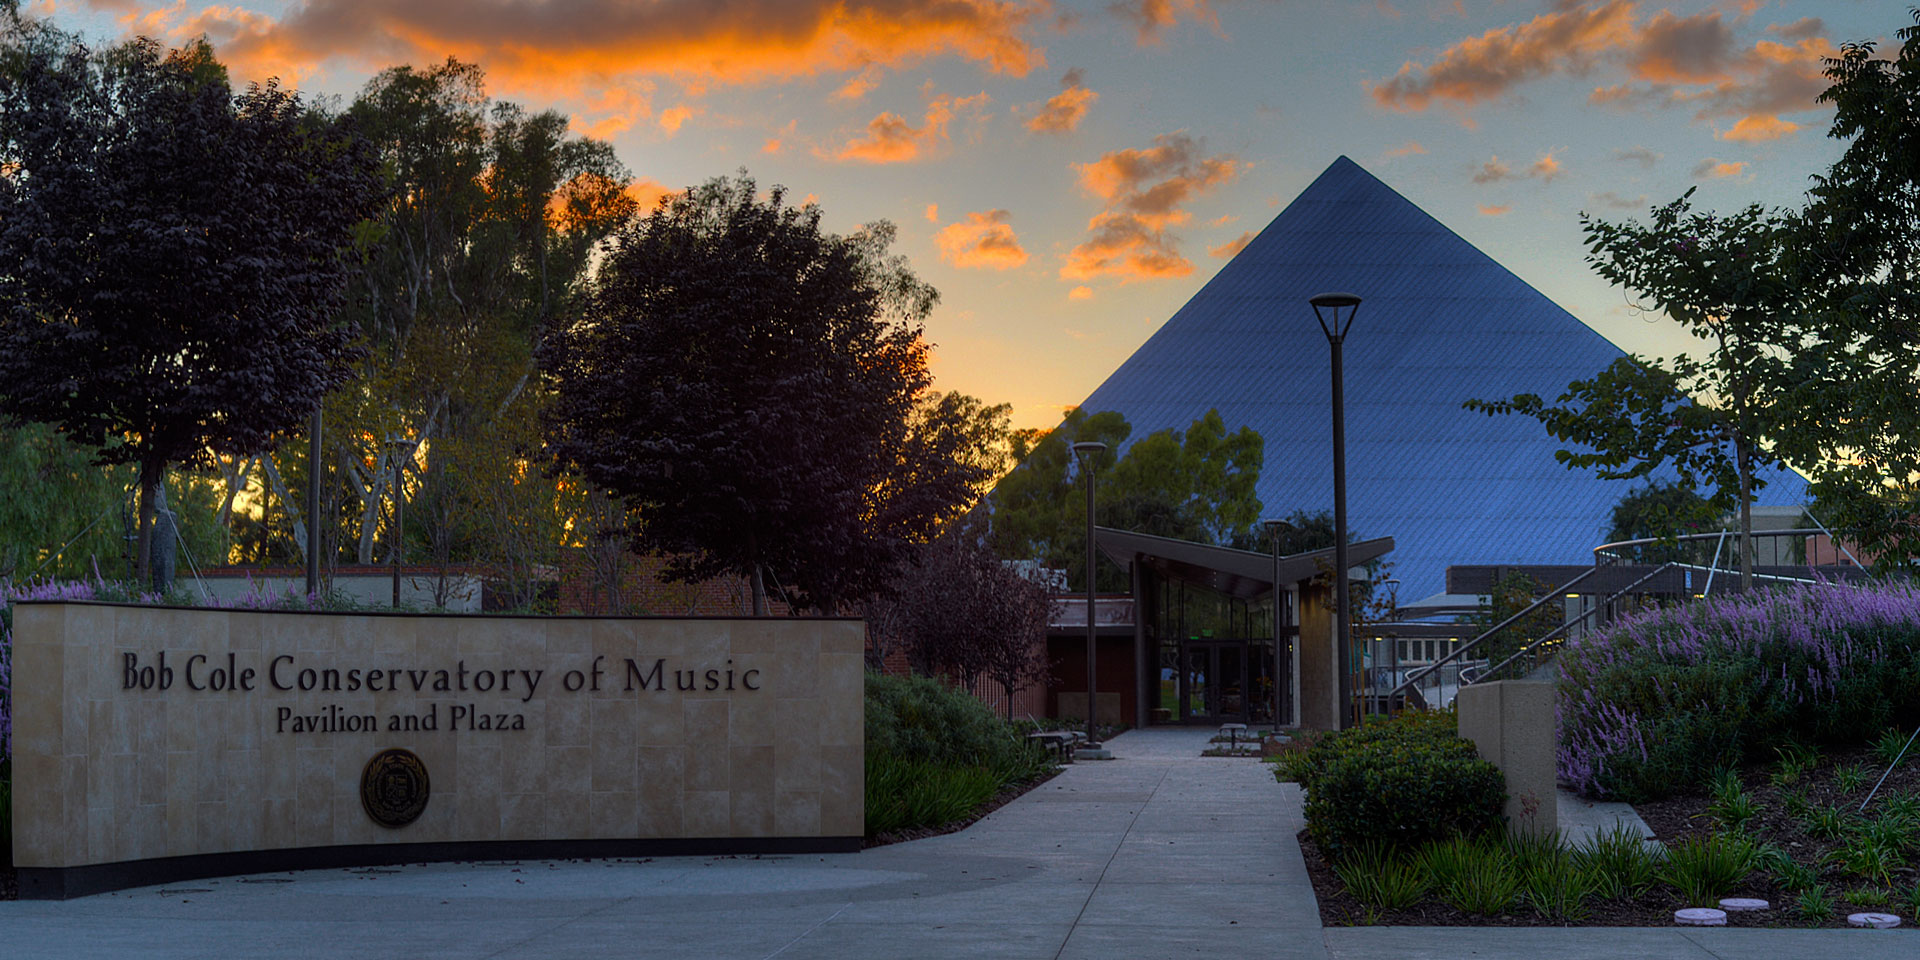 Bob Cole Conservatory Pavilion and Plaza entrance at sunset